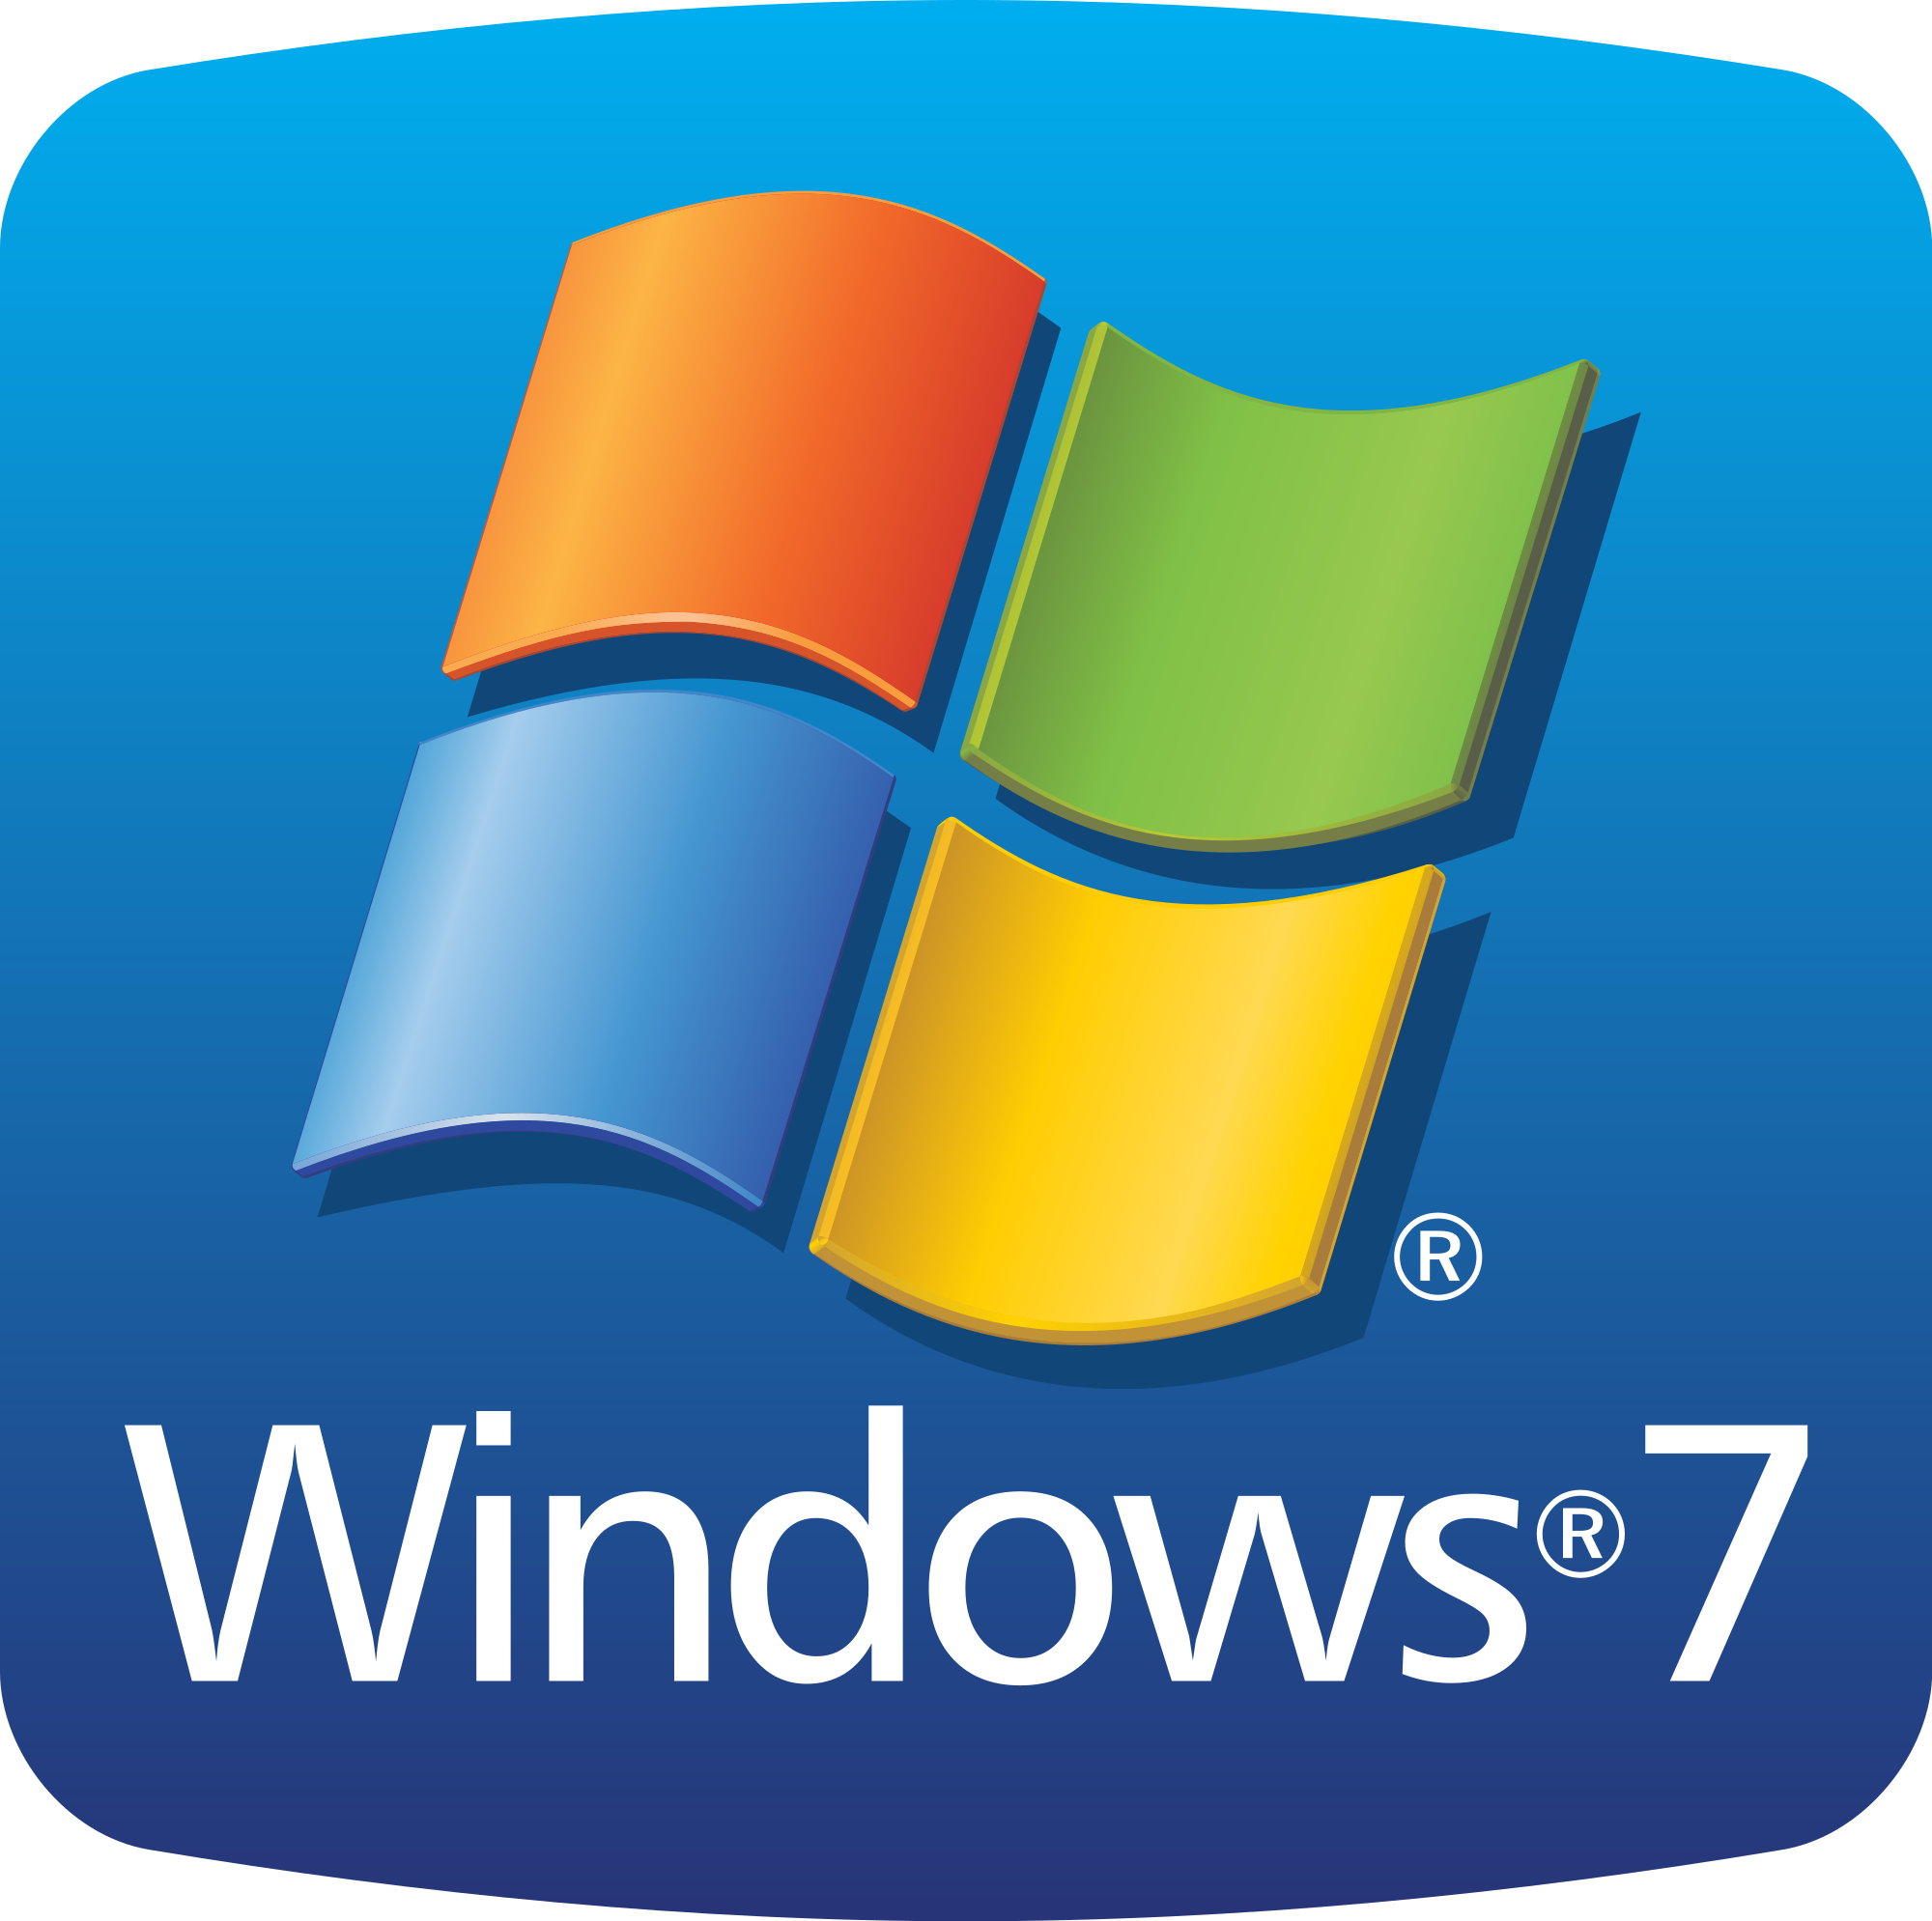 Windows 7 svg #13, Download drawings